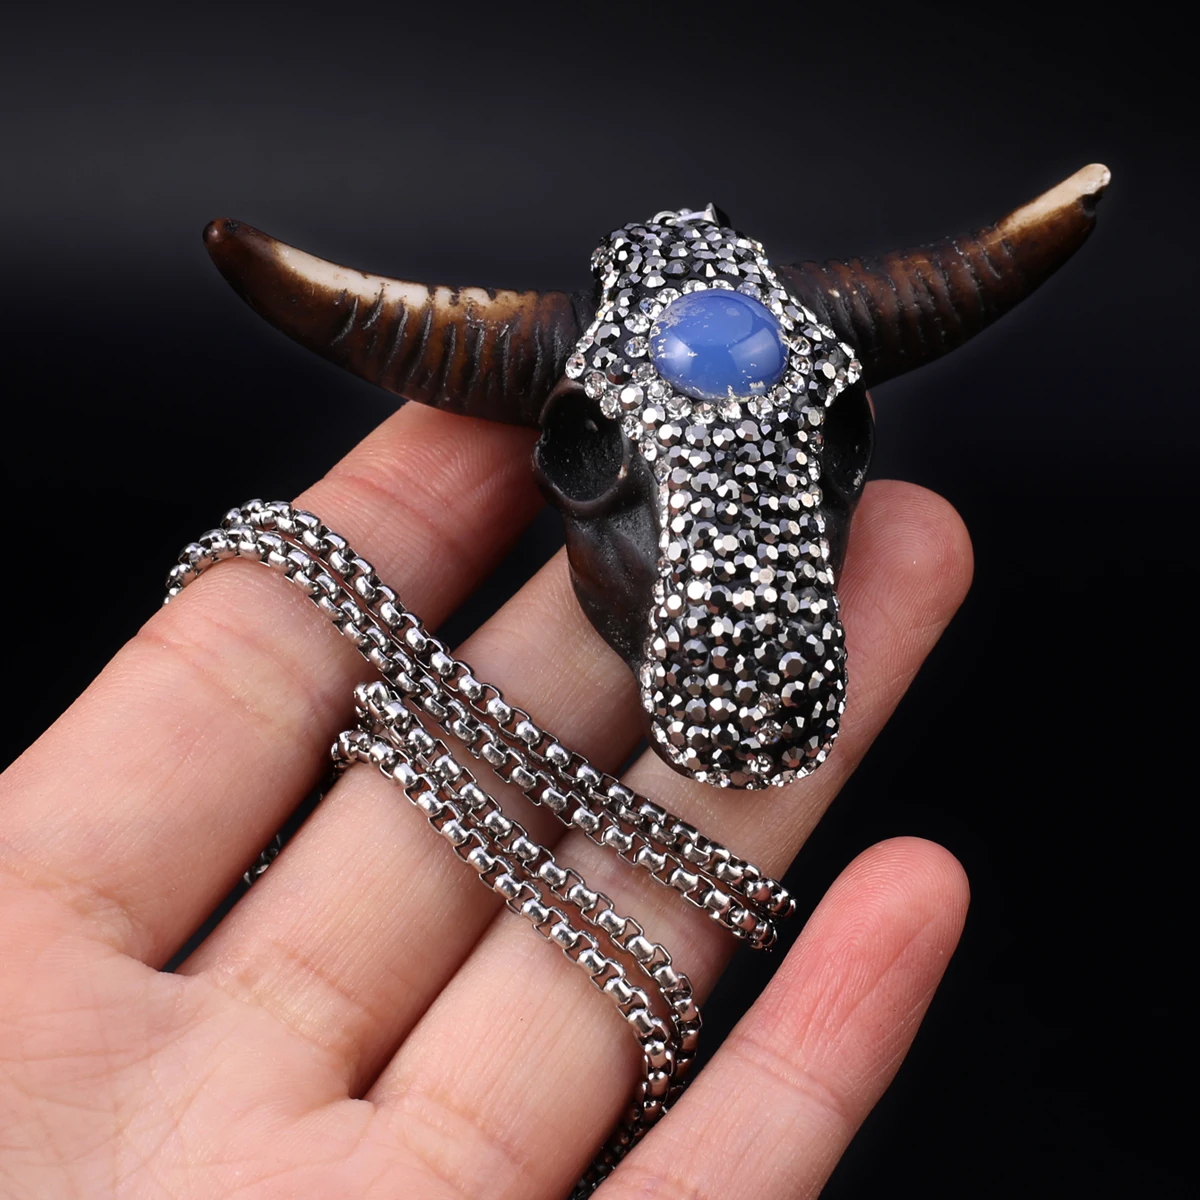 

Bull Skull Pendant Necklace Plating Diamonds Bovine Bone Agates Pendant Silver Color Chains for Jewelry Gift Length 60cm